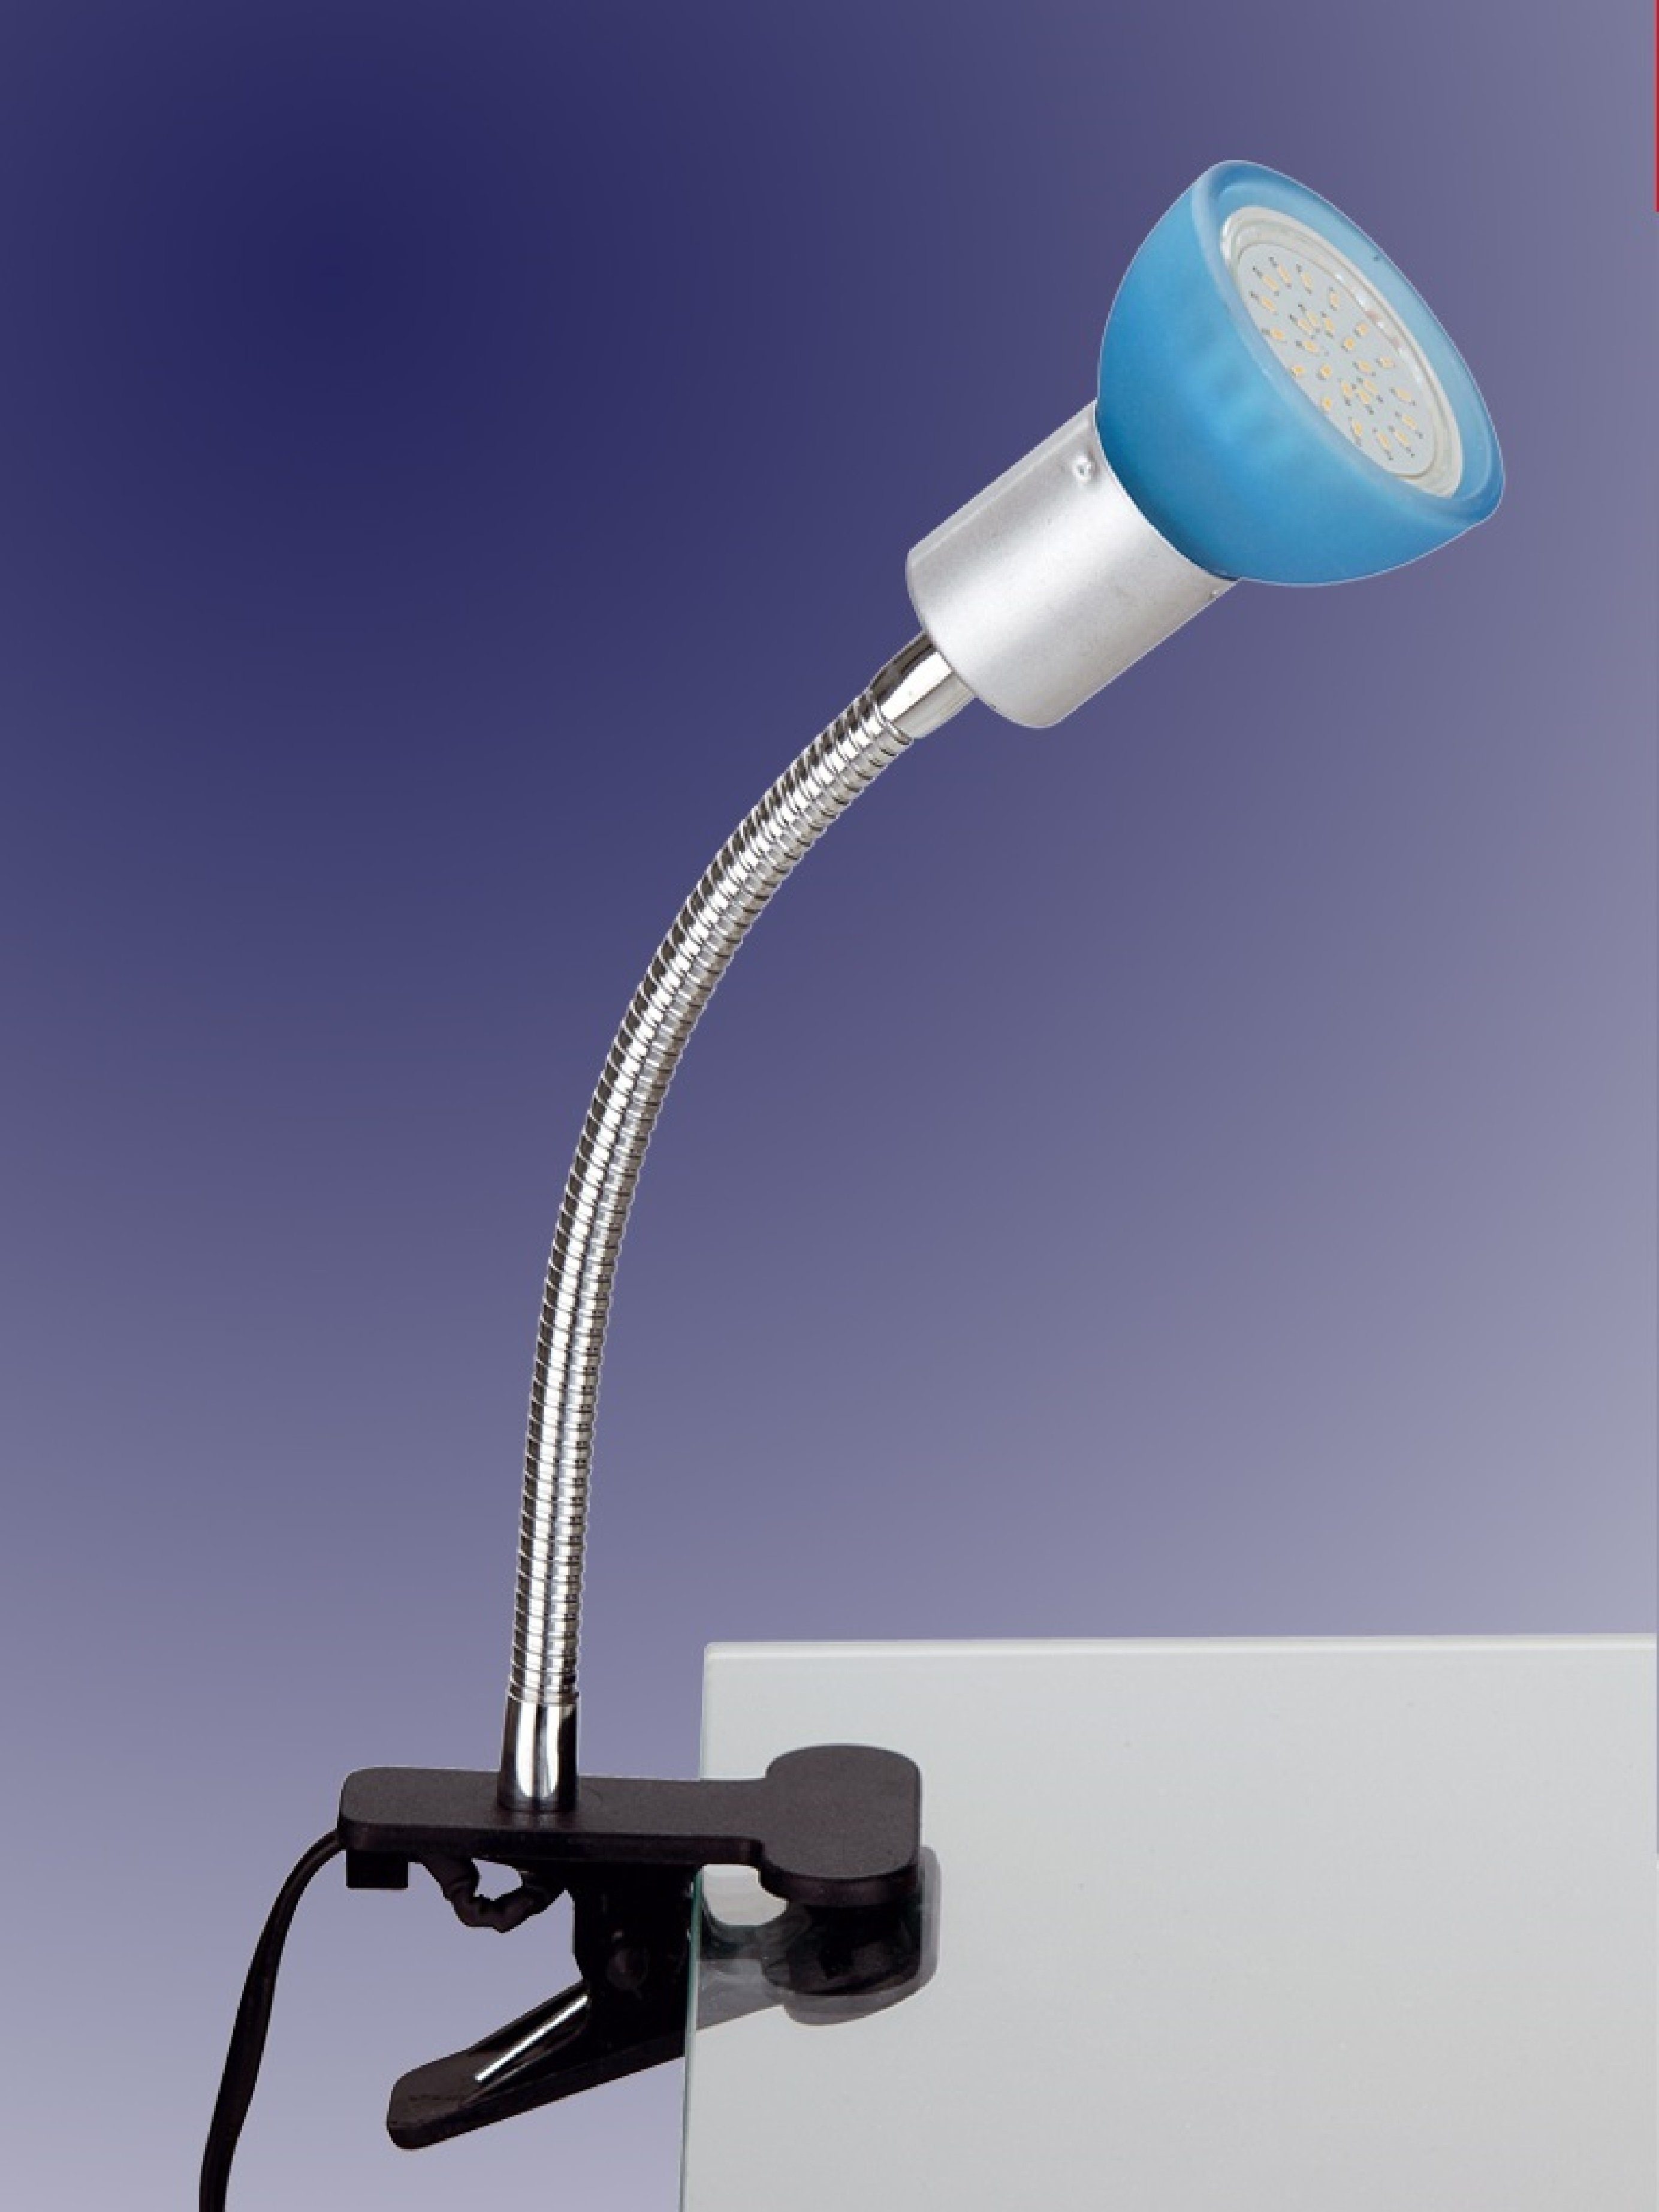 LED Klemmleuchte dimmbar Schreibtischlampe Leselampe USB Kosmetik Tattoo Lampe